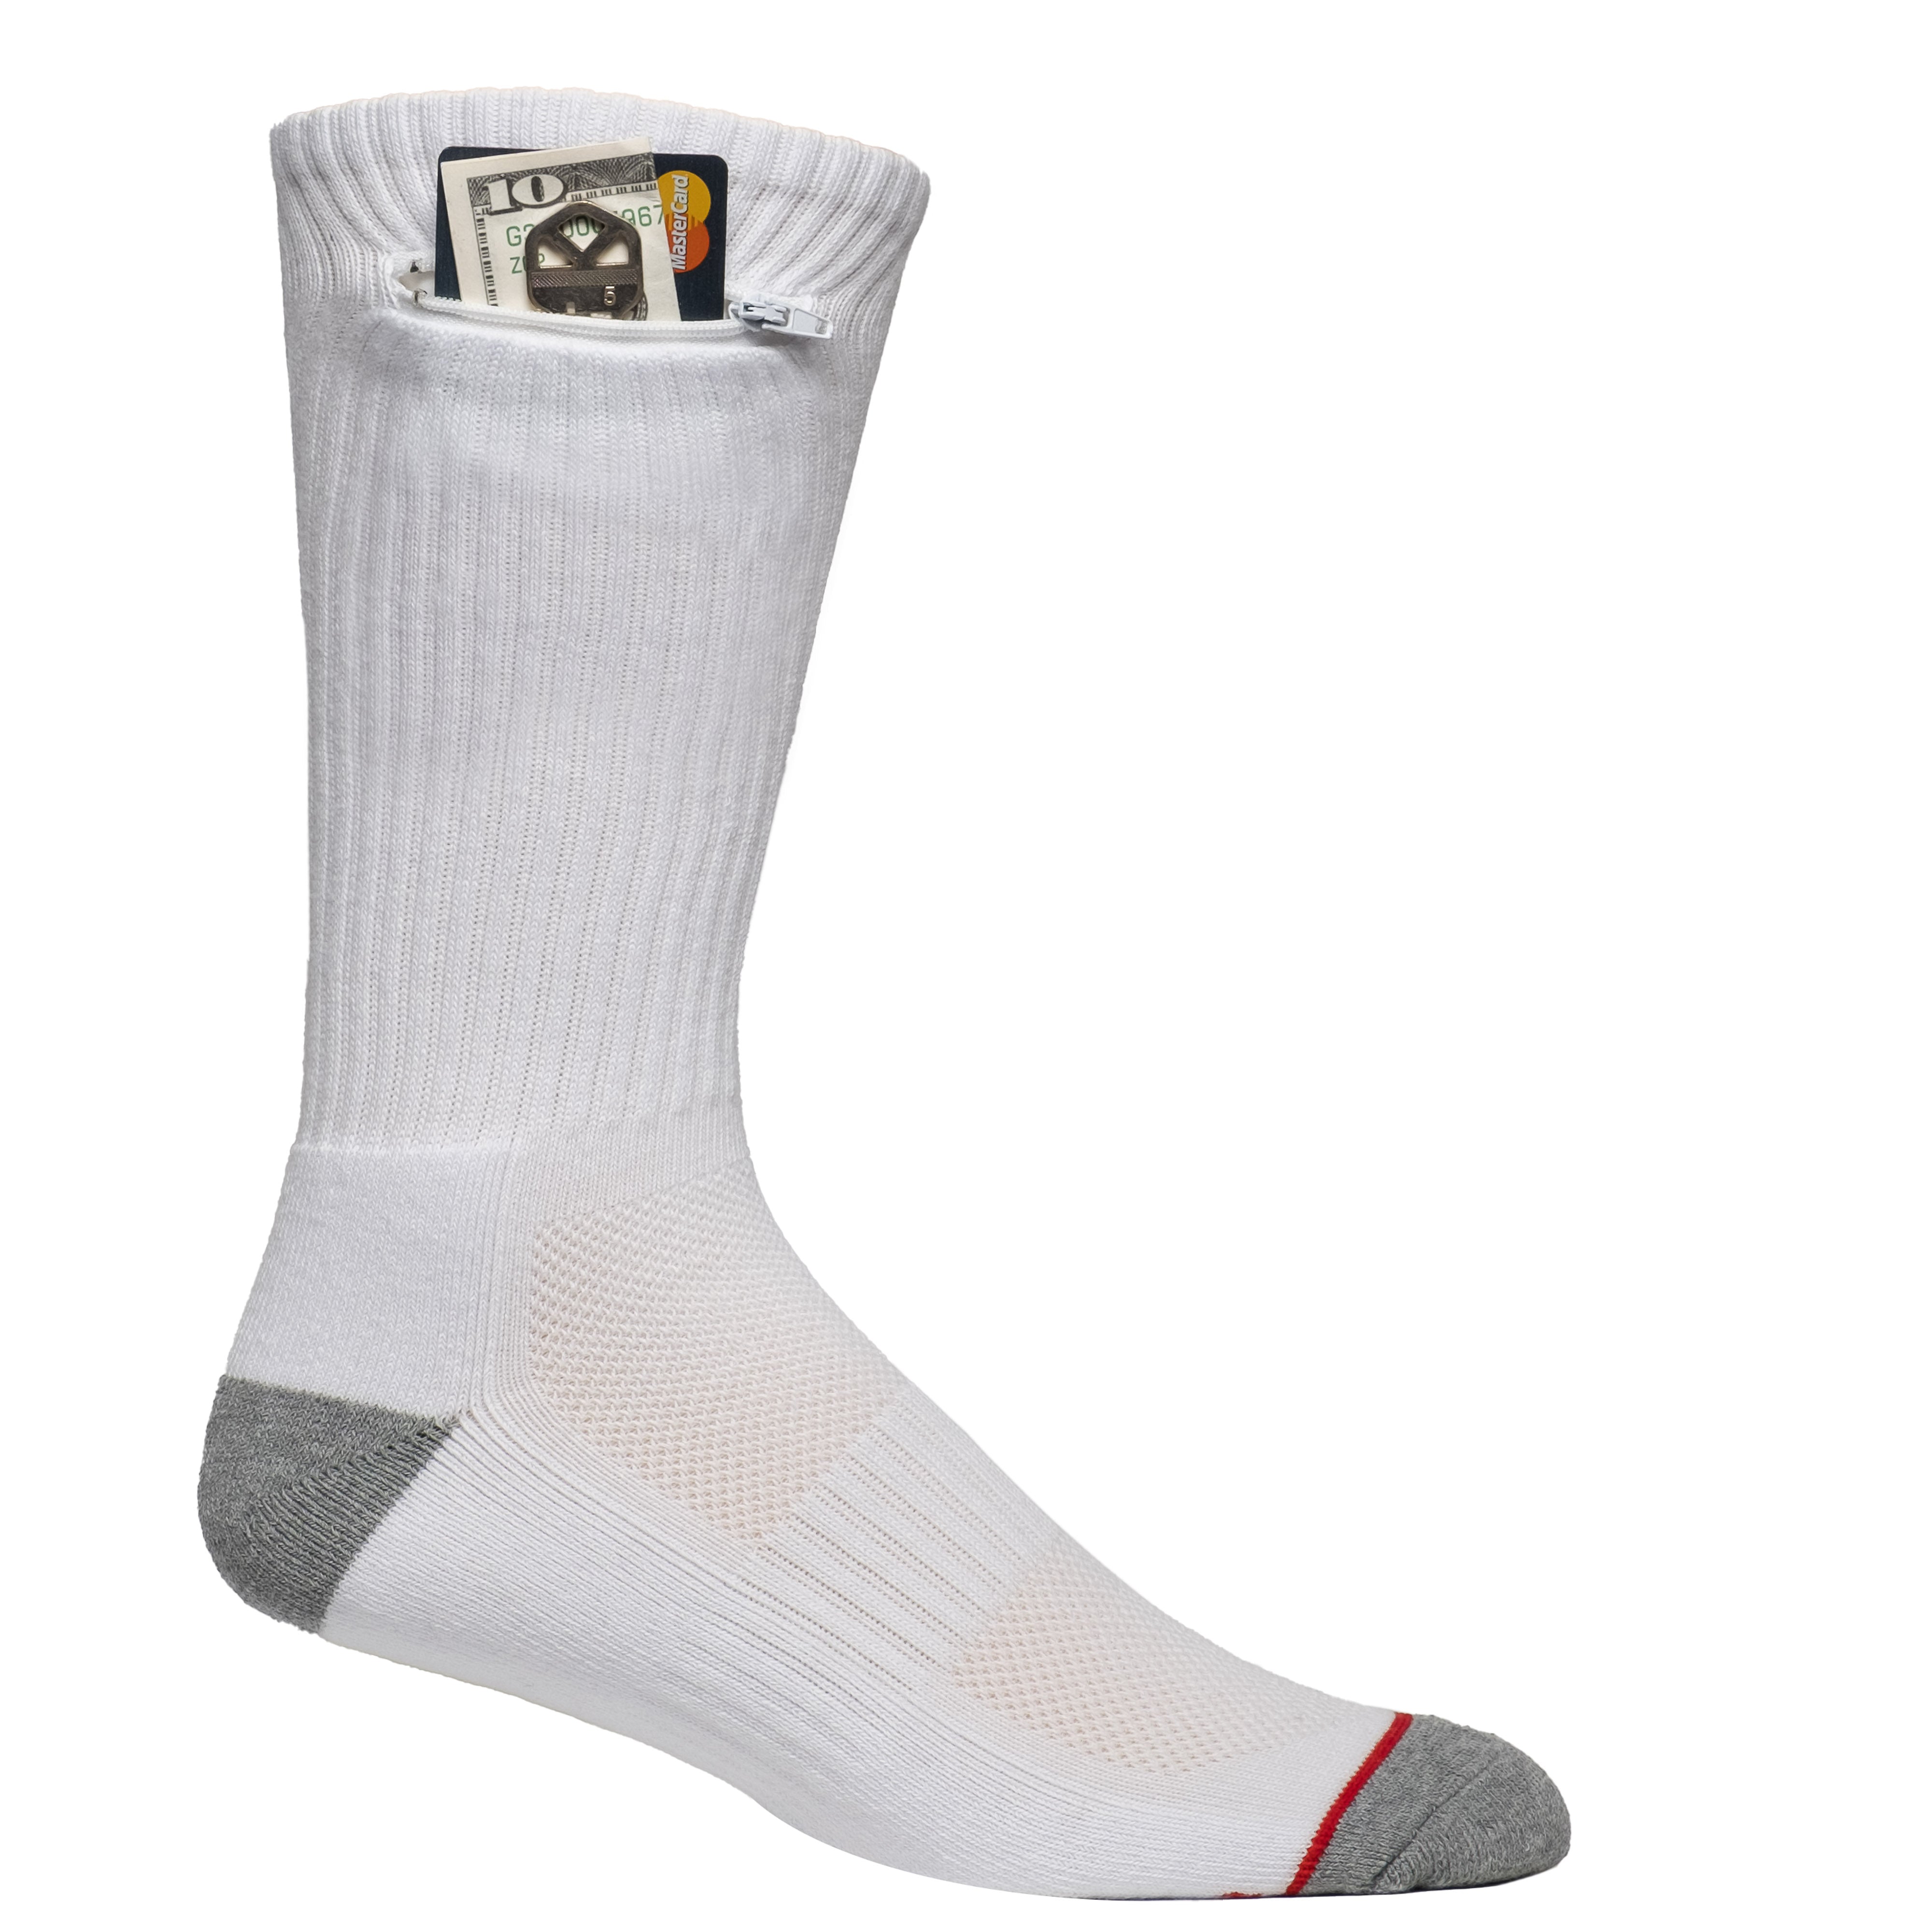 Pocket Socks® Crew White, Medium